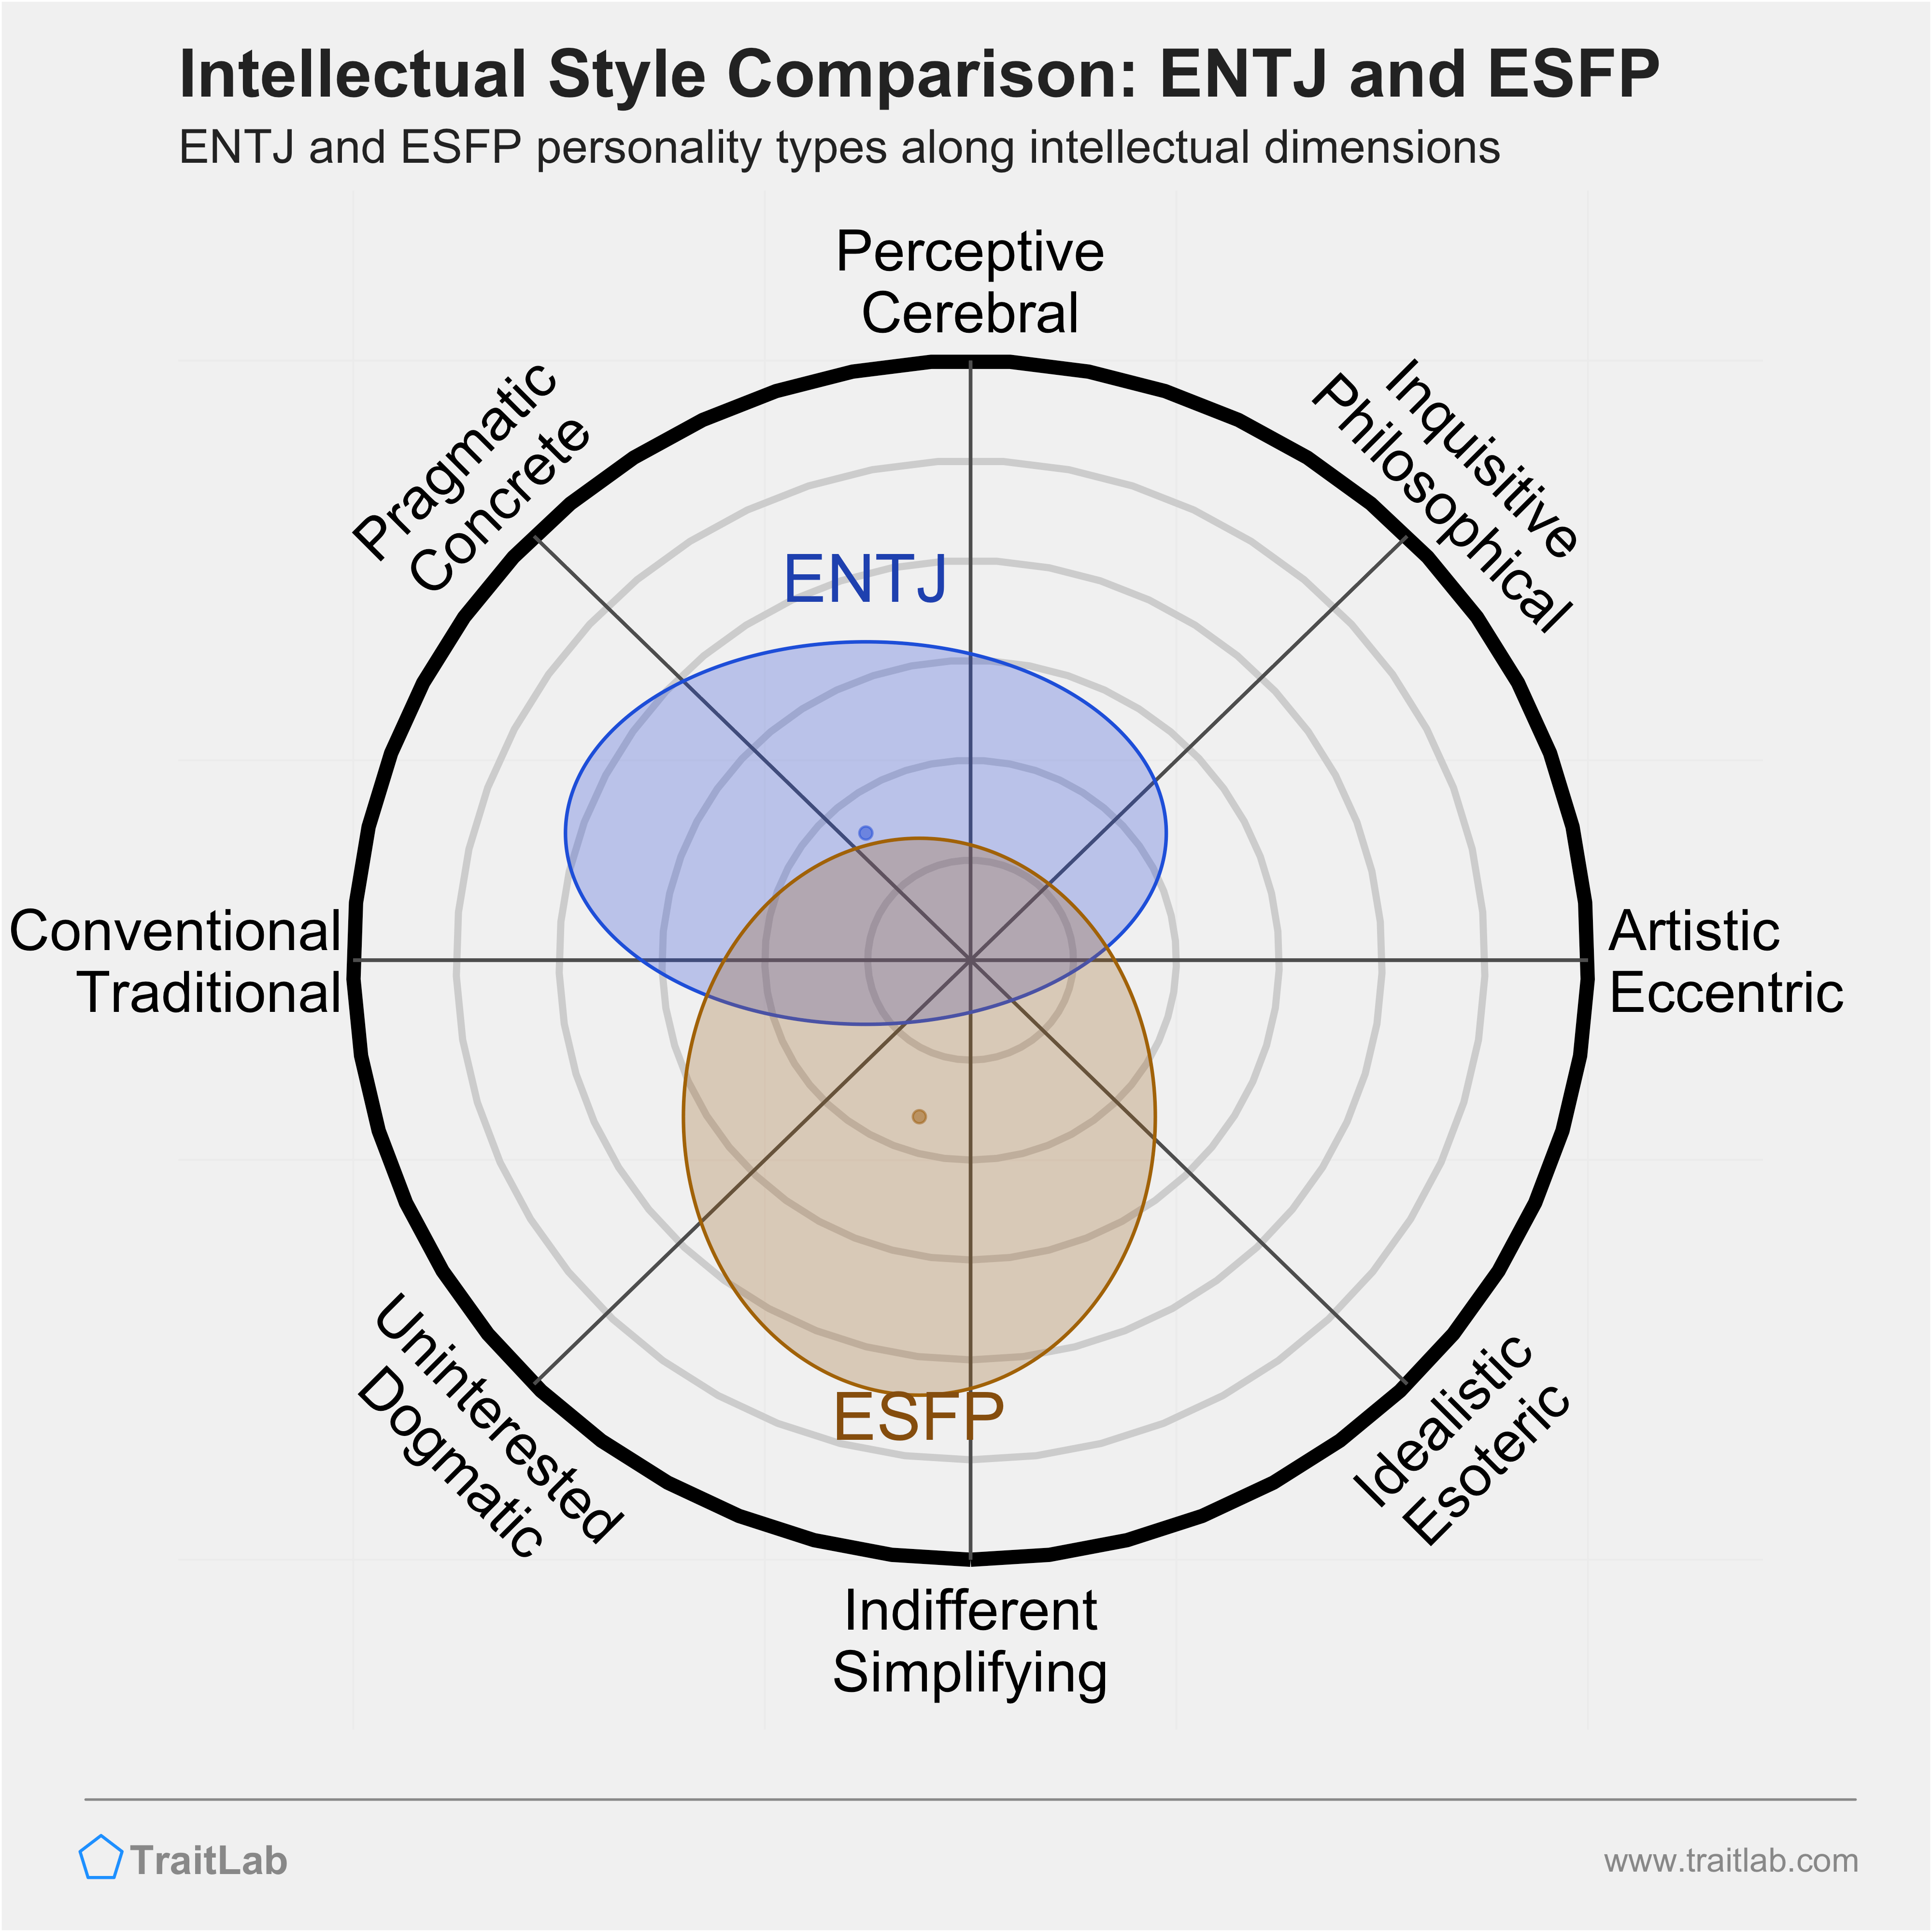 ENTJ and ESFP comparison across intellectual dimensions